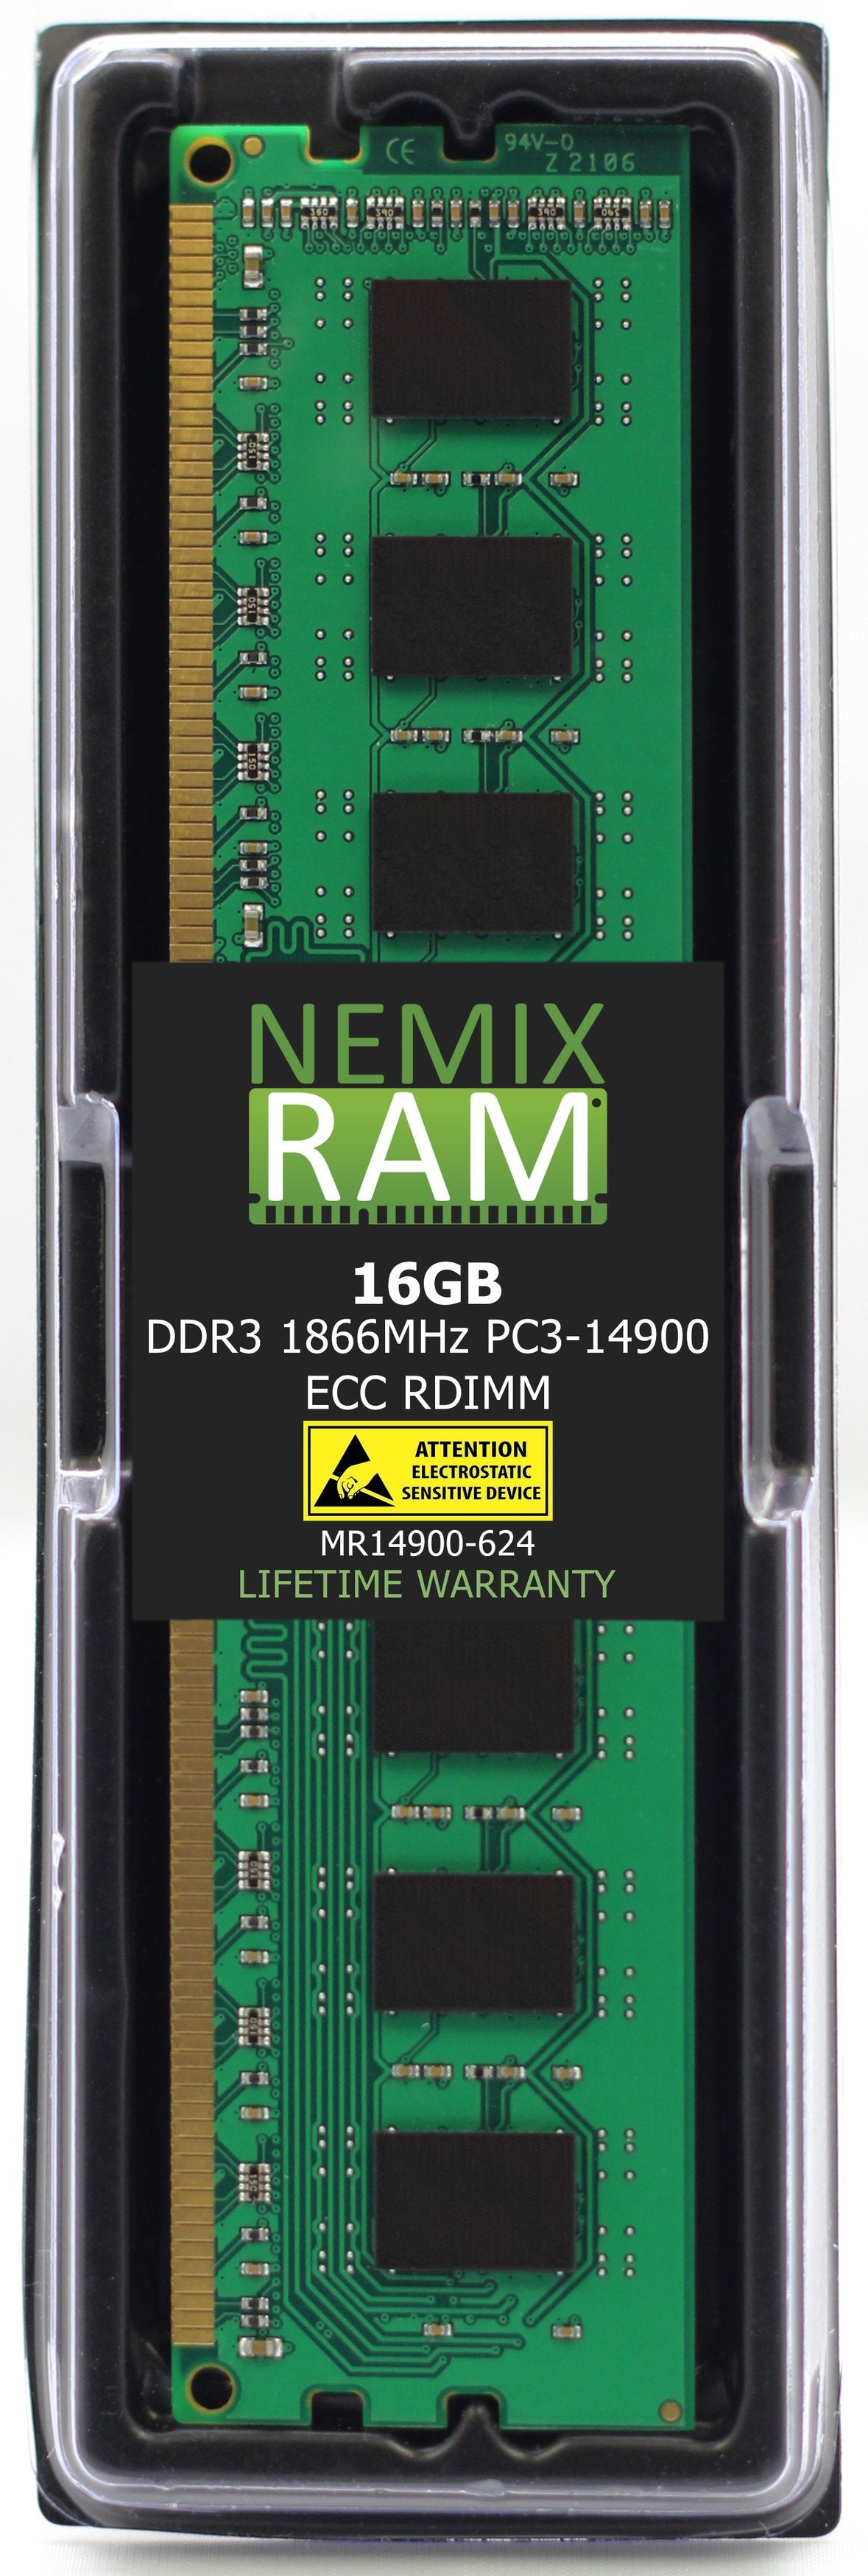 16GB DDR3 1866MHZ PC3-14900 RDIMM Compatible with SUPERMICRO MEM-DR316L-SL04-ER18